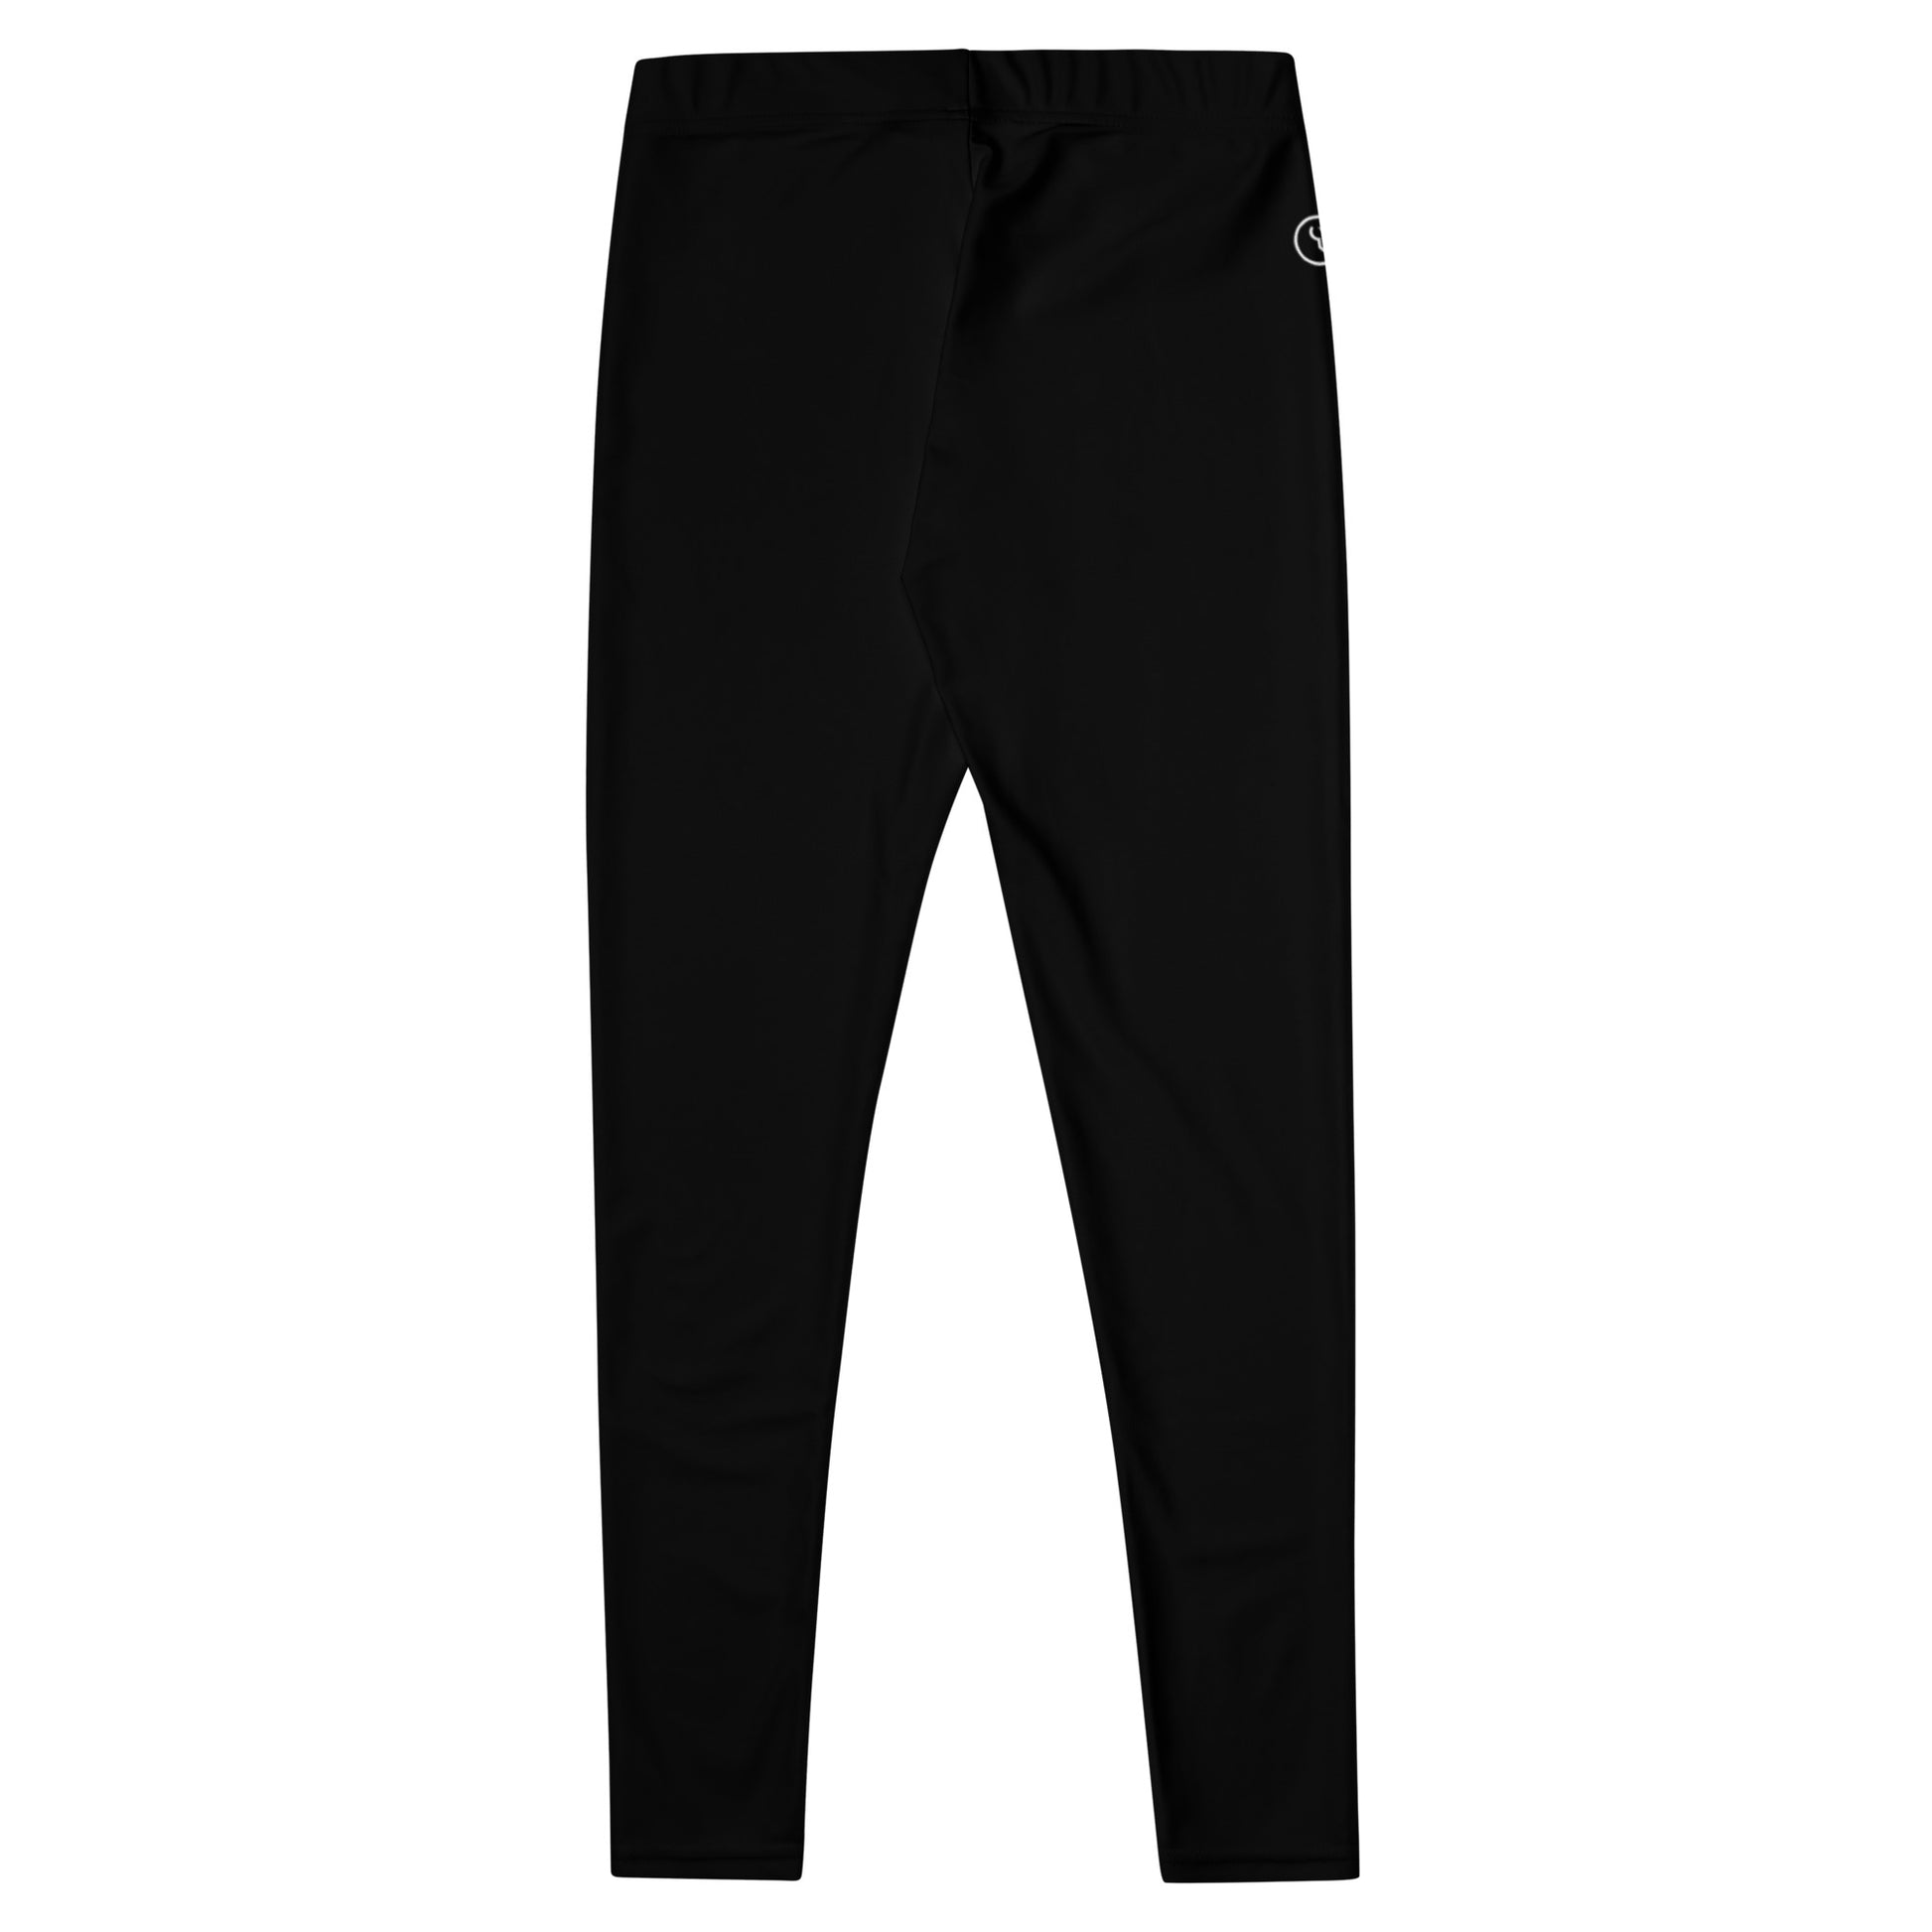 Humble Sportswear, women’s color match leggings, black leggings, active leggings